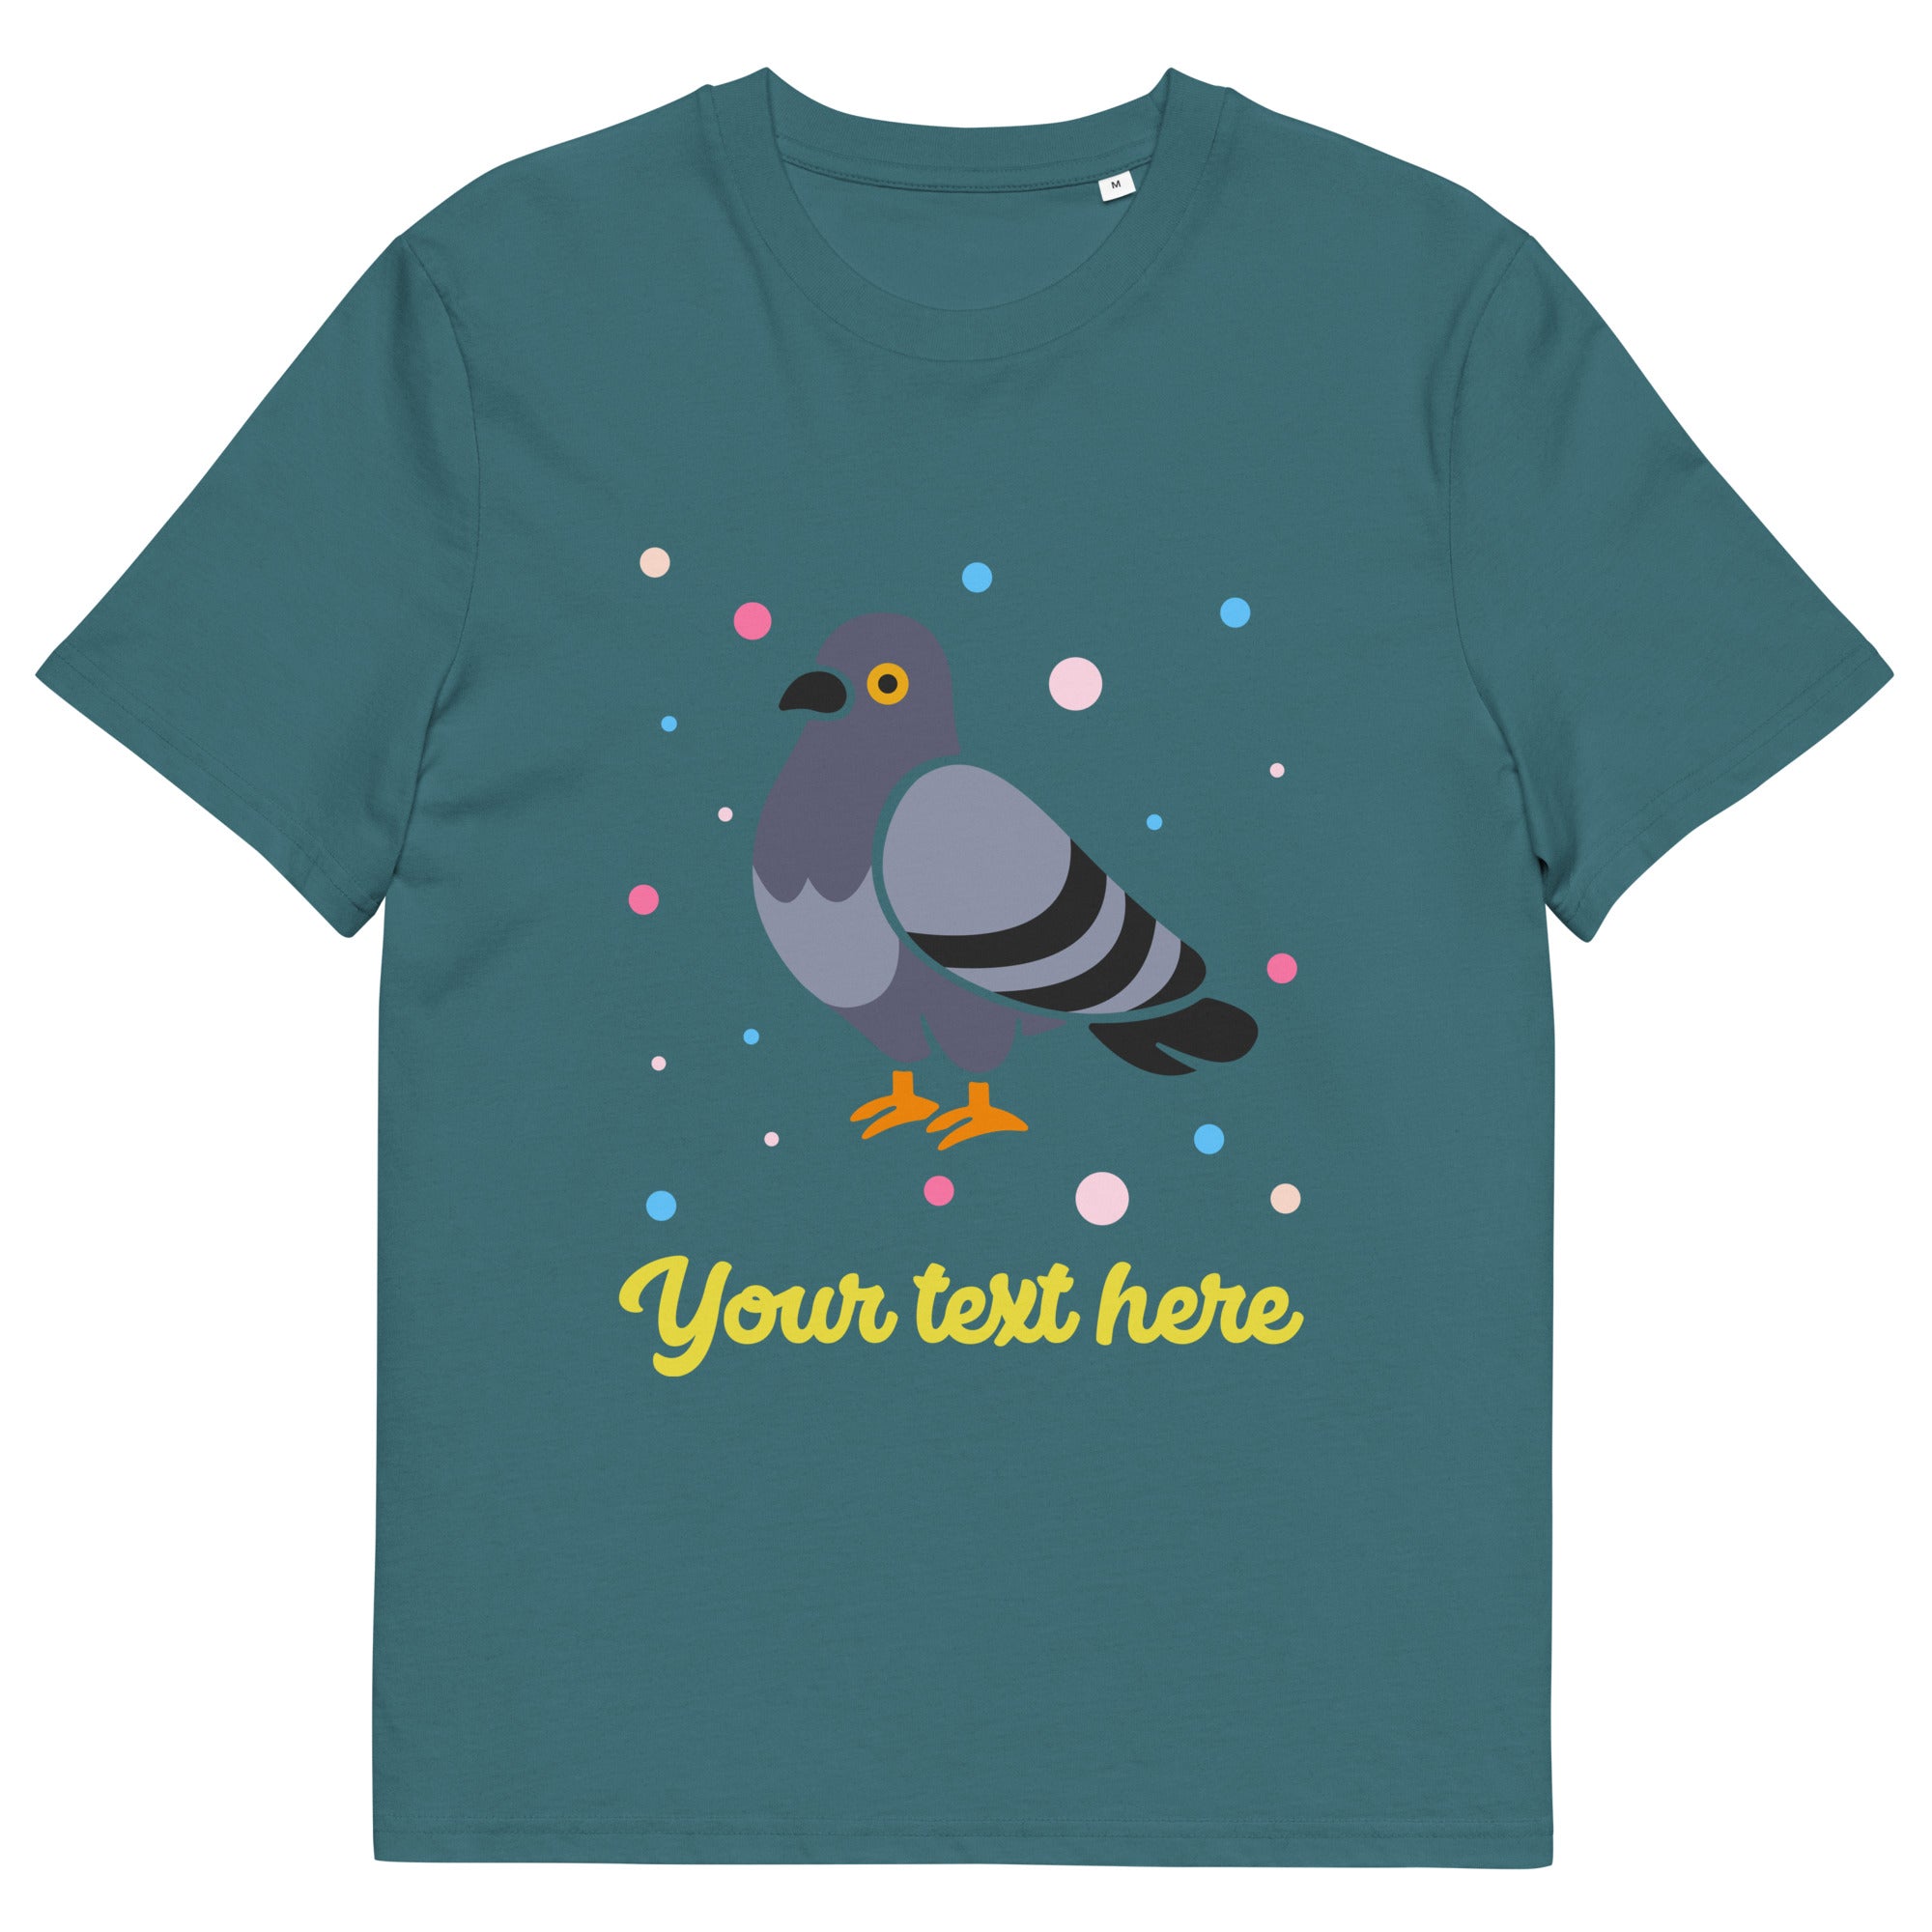 Personalised Custom Text - Organic Cotton Adults Unisex T-Shirt - London Doodles - Pigeon - Stargazer